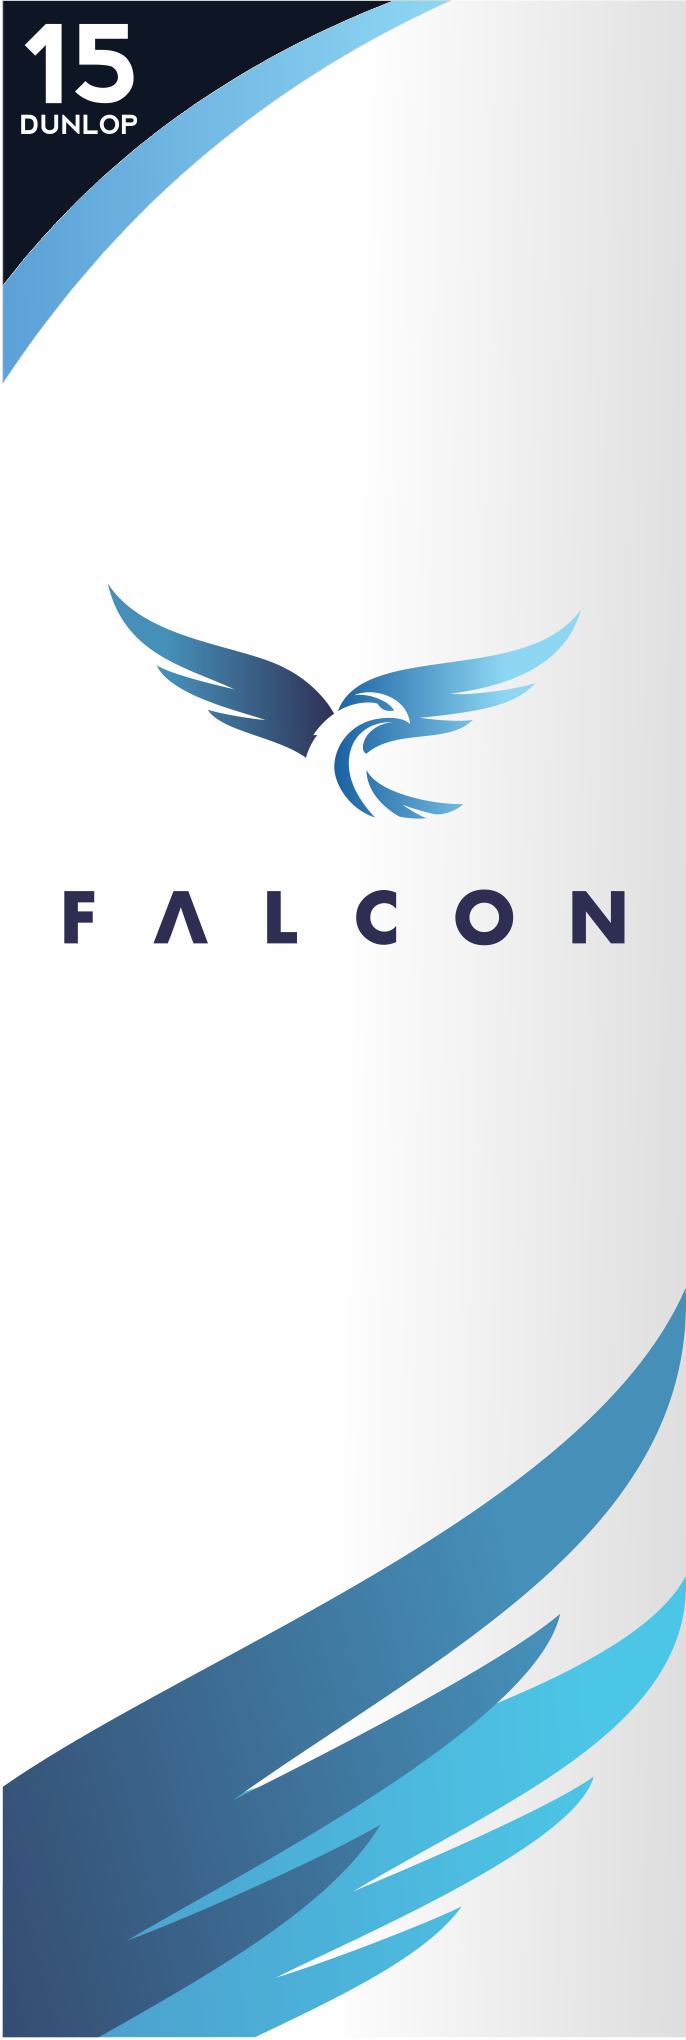 Falicon-flyer